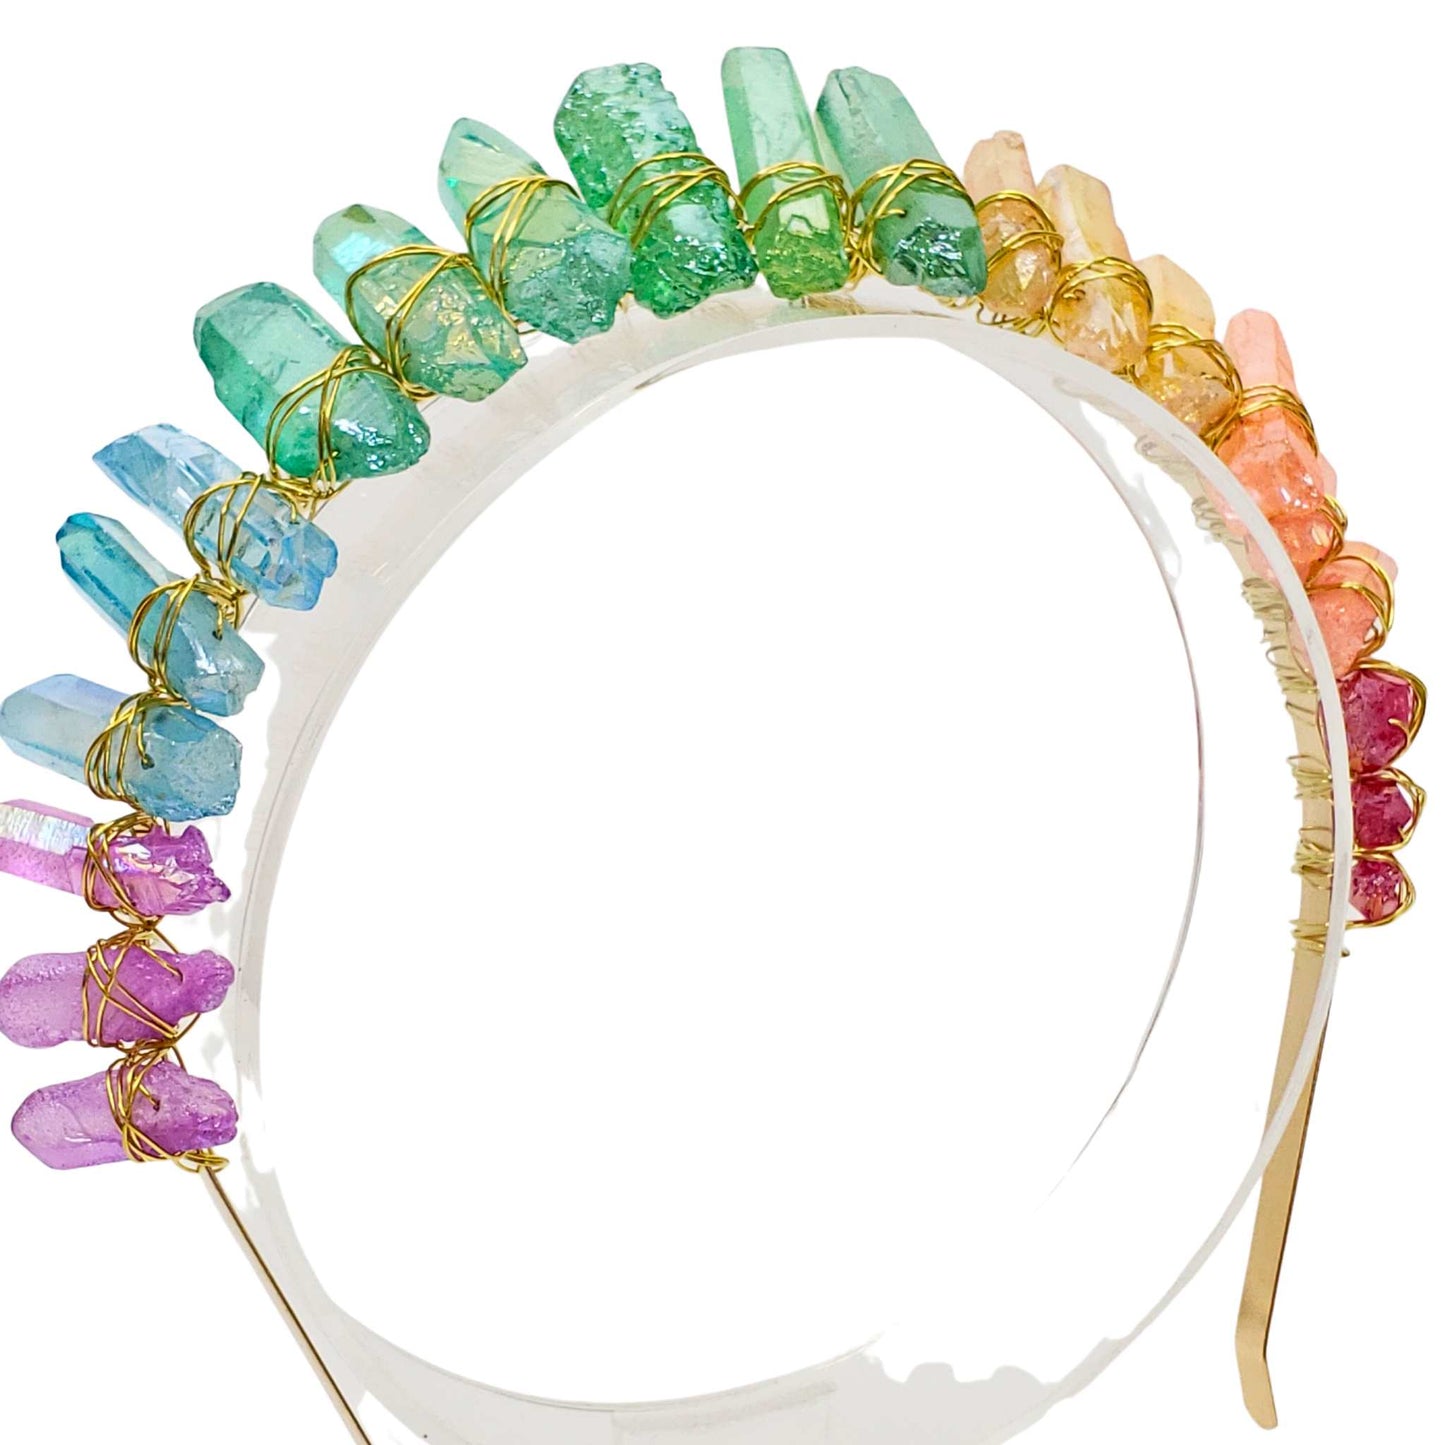 Quartz Crystal Tiara Crowns: Celebrate Life's Magic